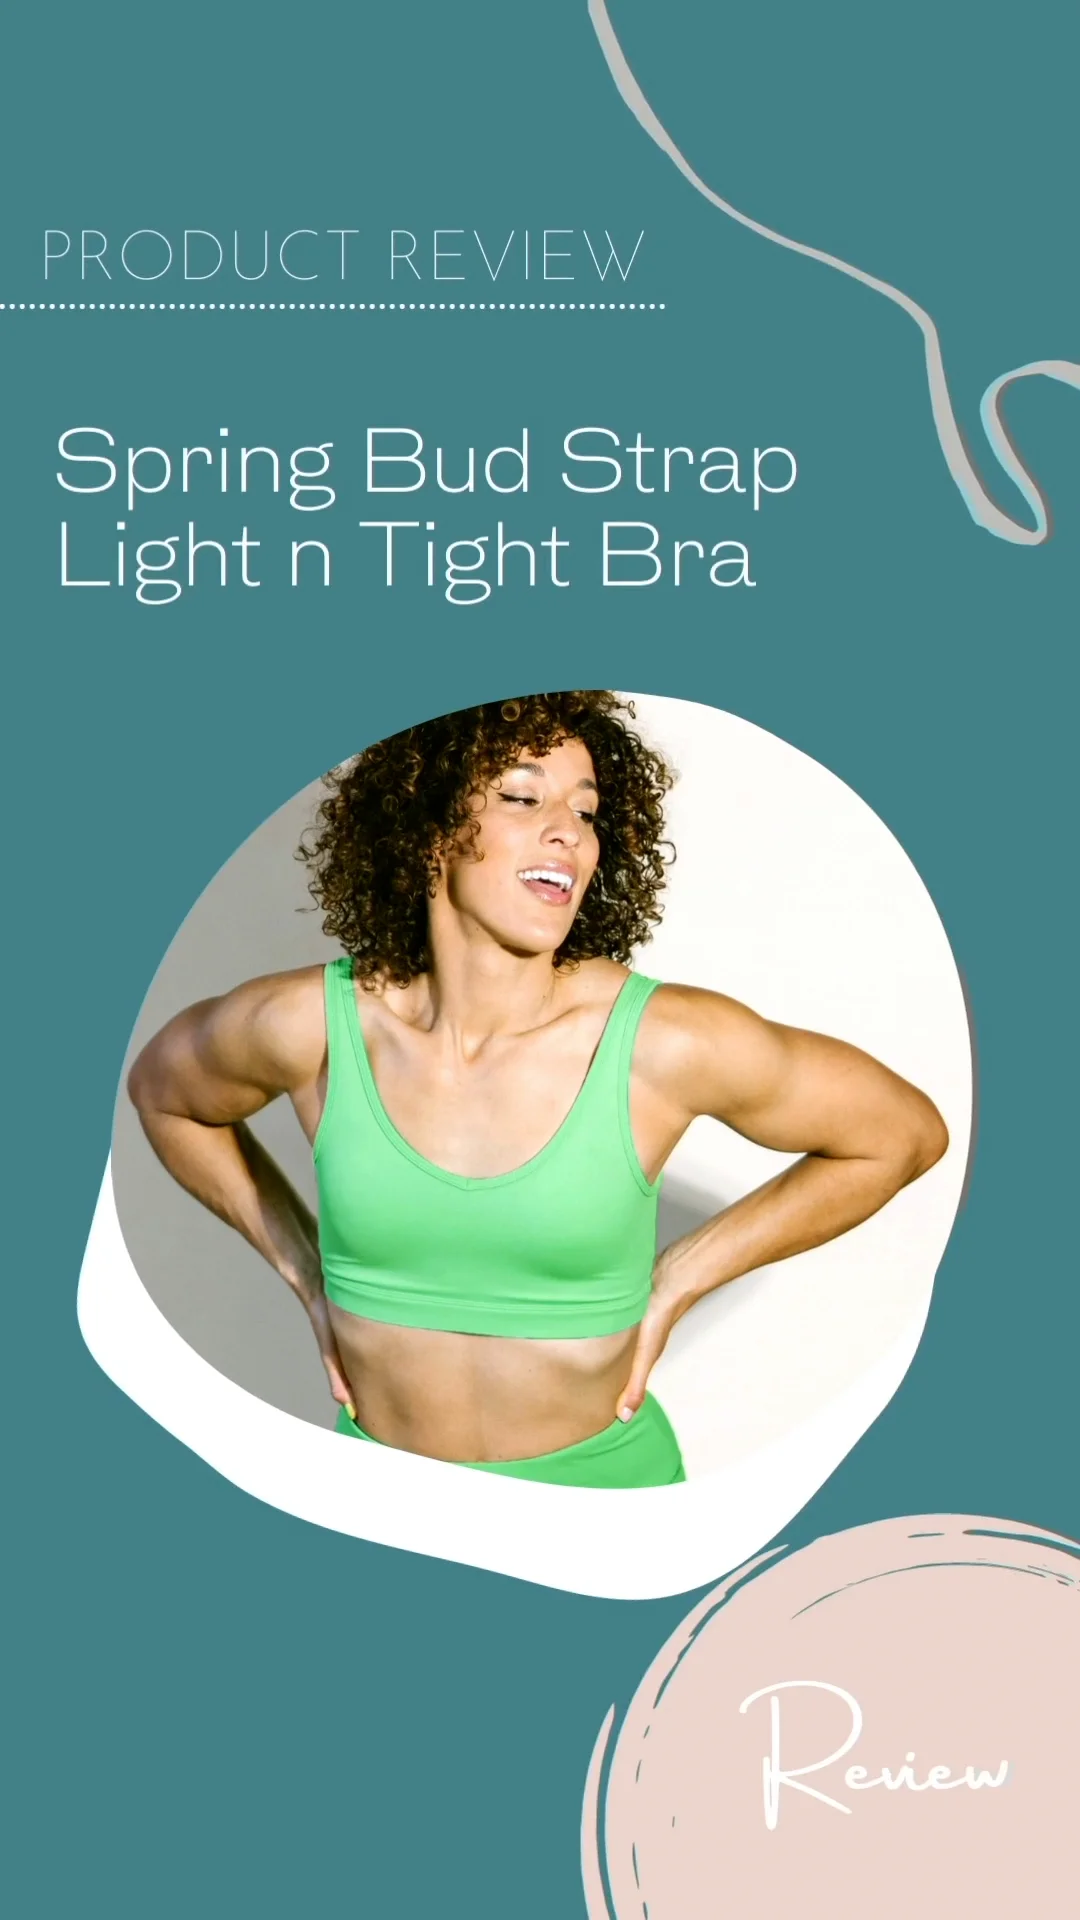 Spring Bud Strap Light n Tight Bra #3009 on Vimeo